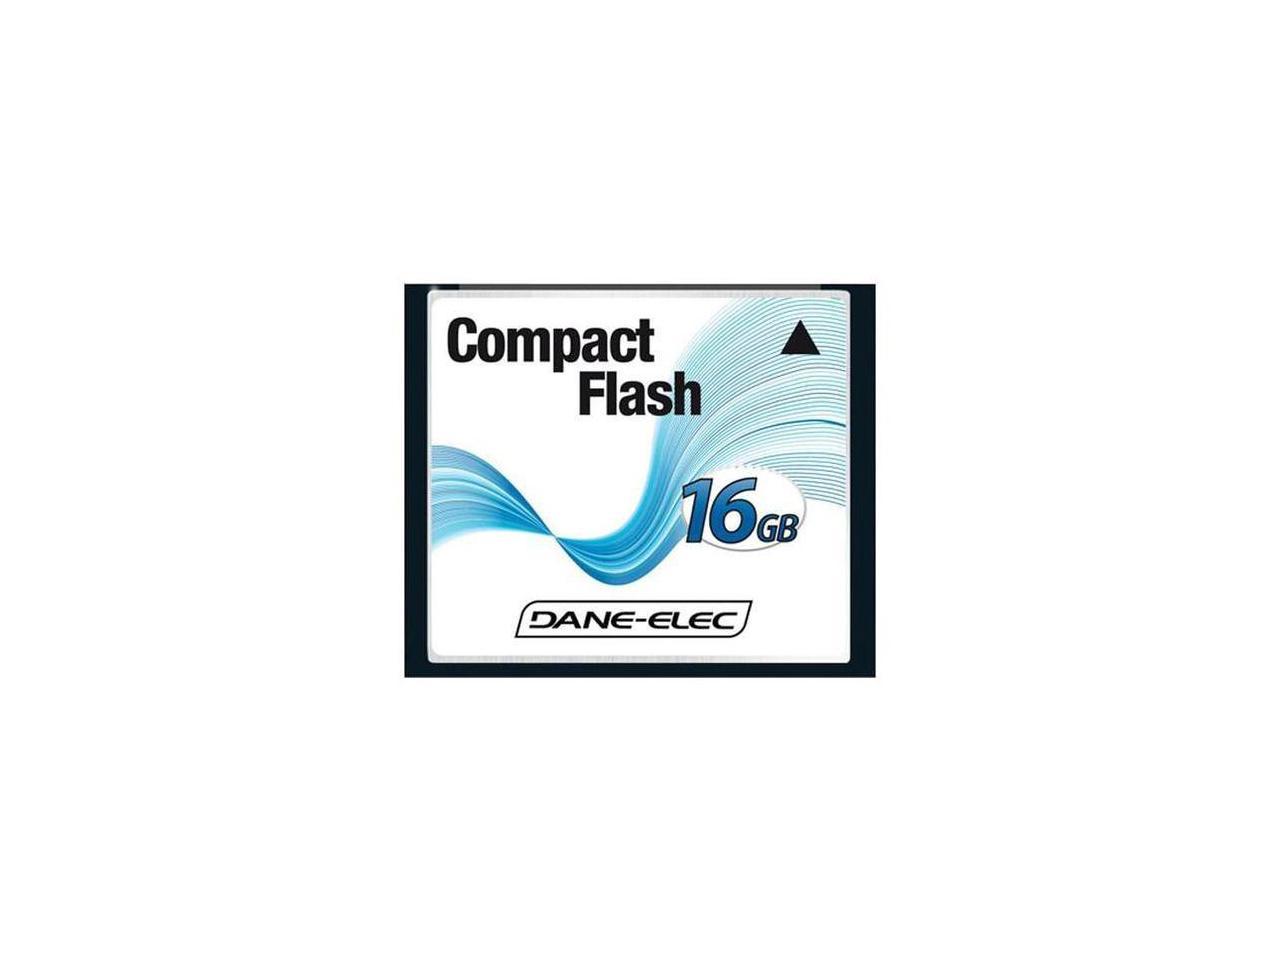 Minolta DiMage 7 Digital Camera Memory Card 4GB CompactFlash Memory Card